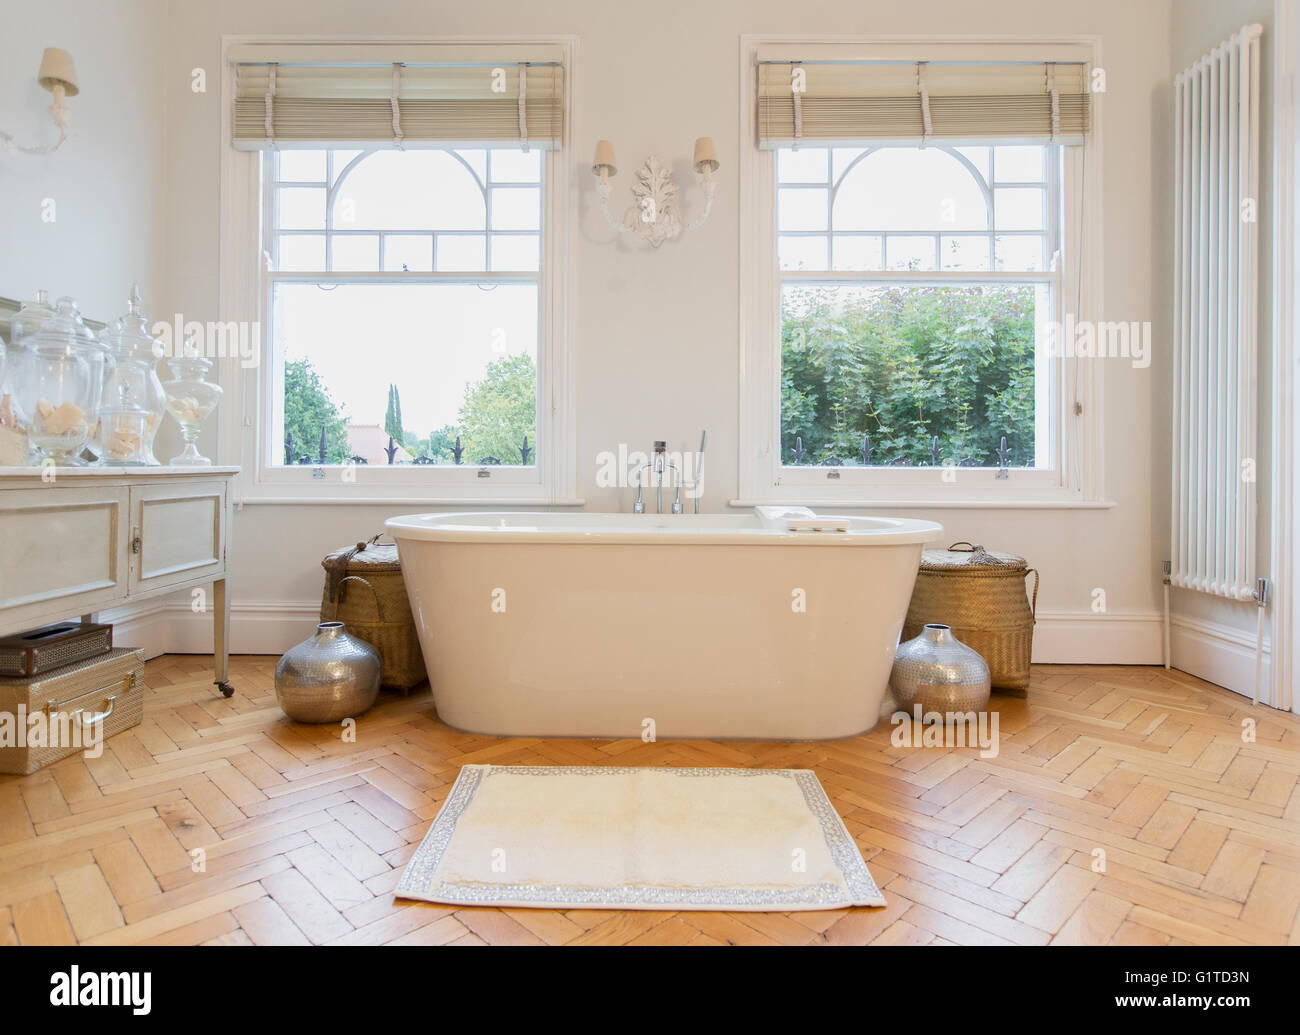 Home showcase interior bathtub and parquet floor Stock Photo